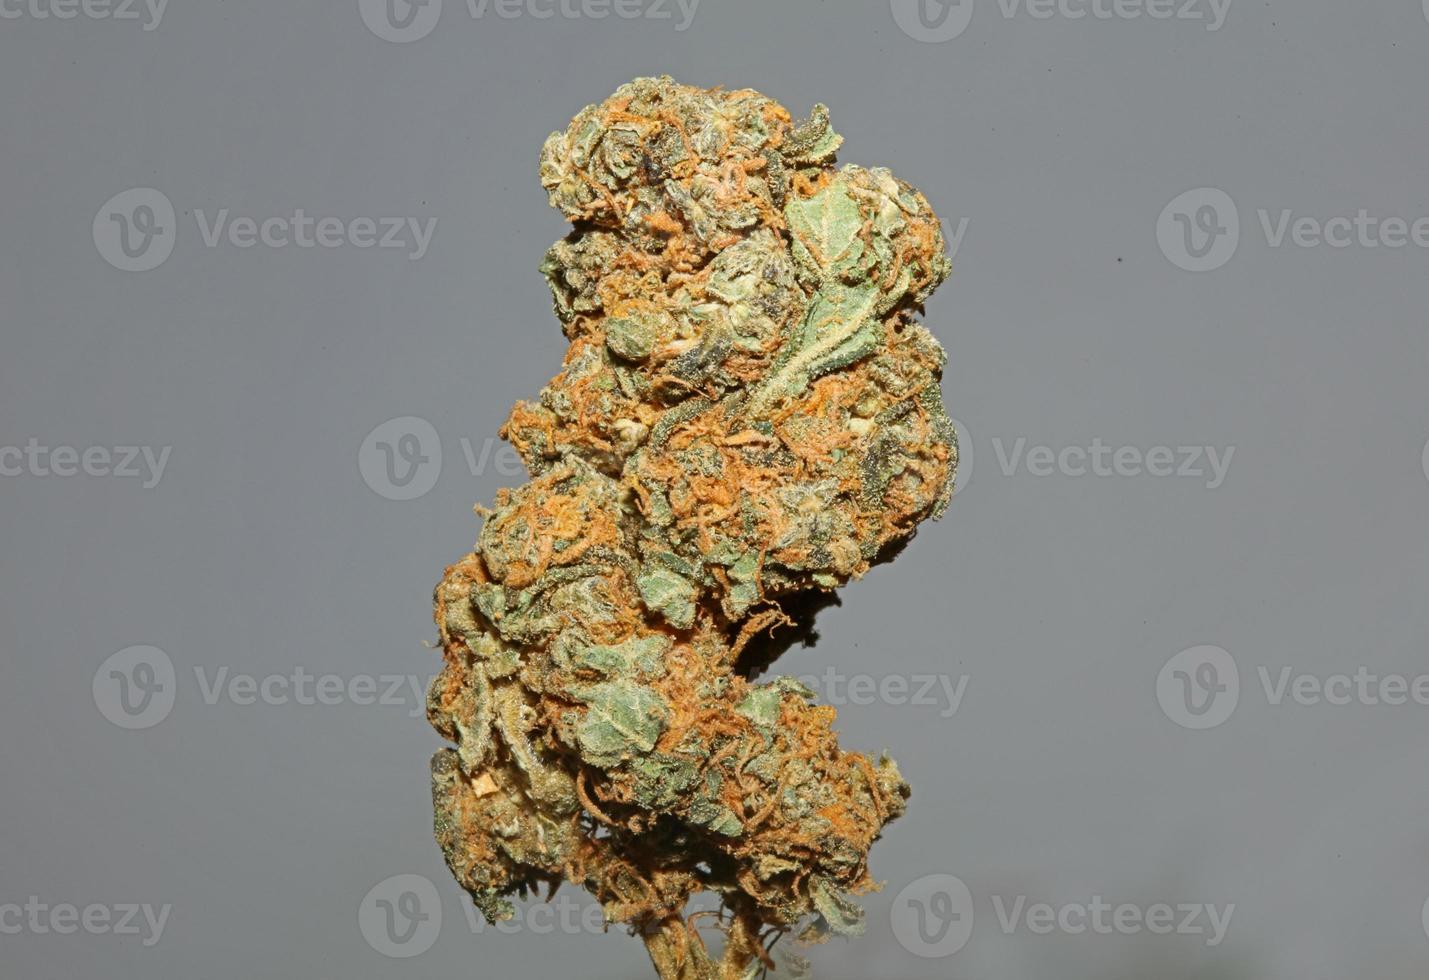 cannabis sativa grote knop familie cannabaceae close-up moderne achtergrond hoge kwaliteit groot formaat prints foto